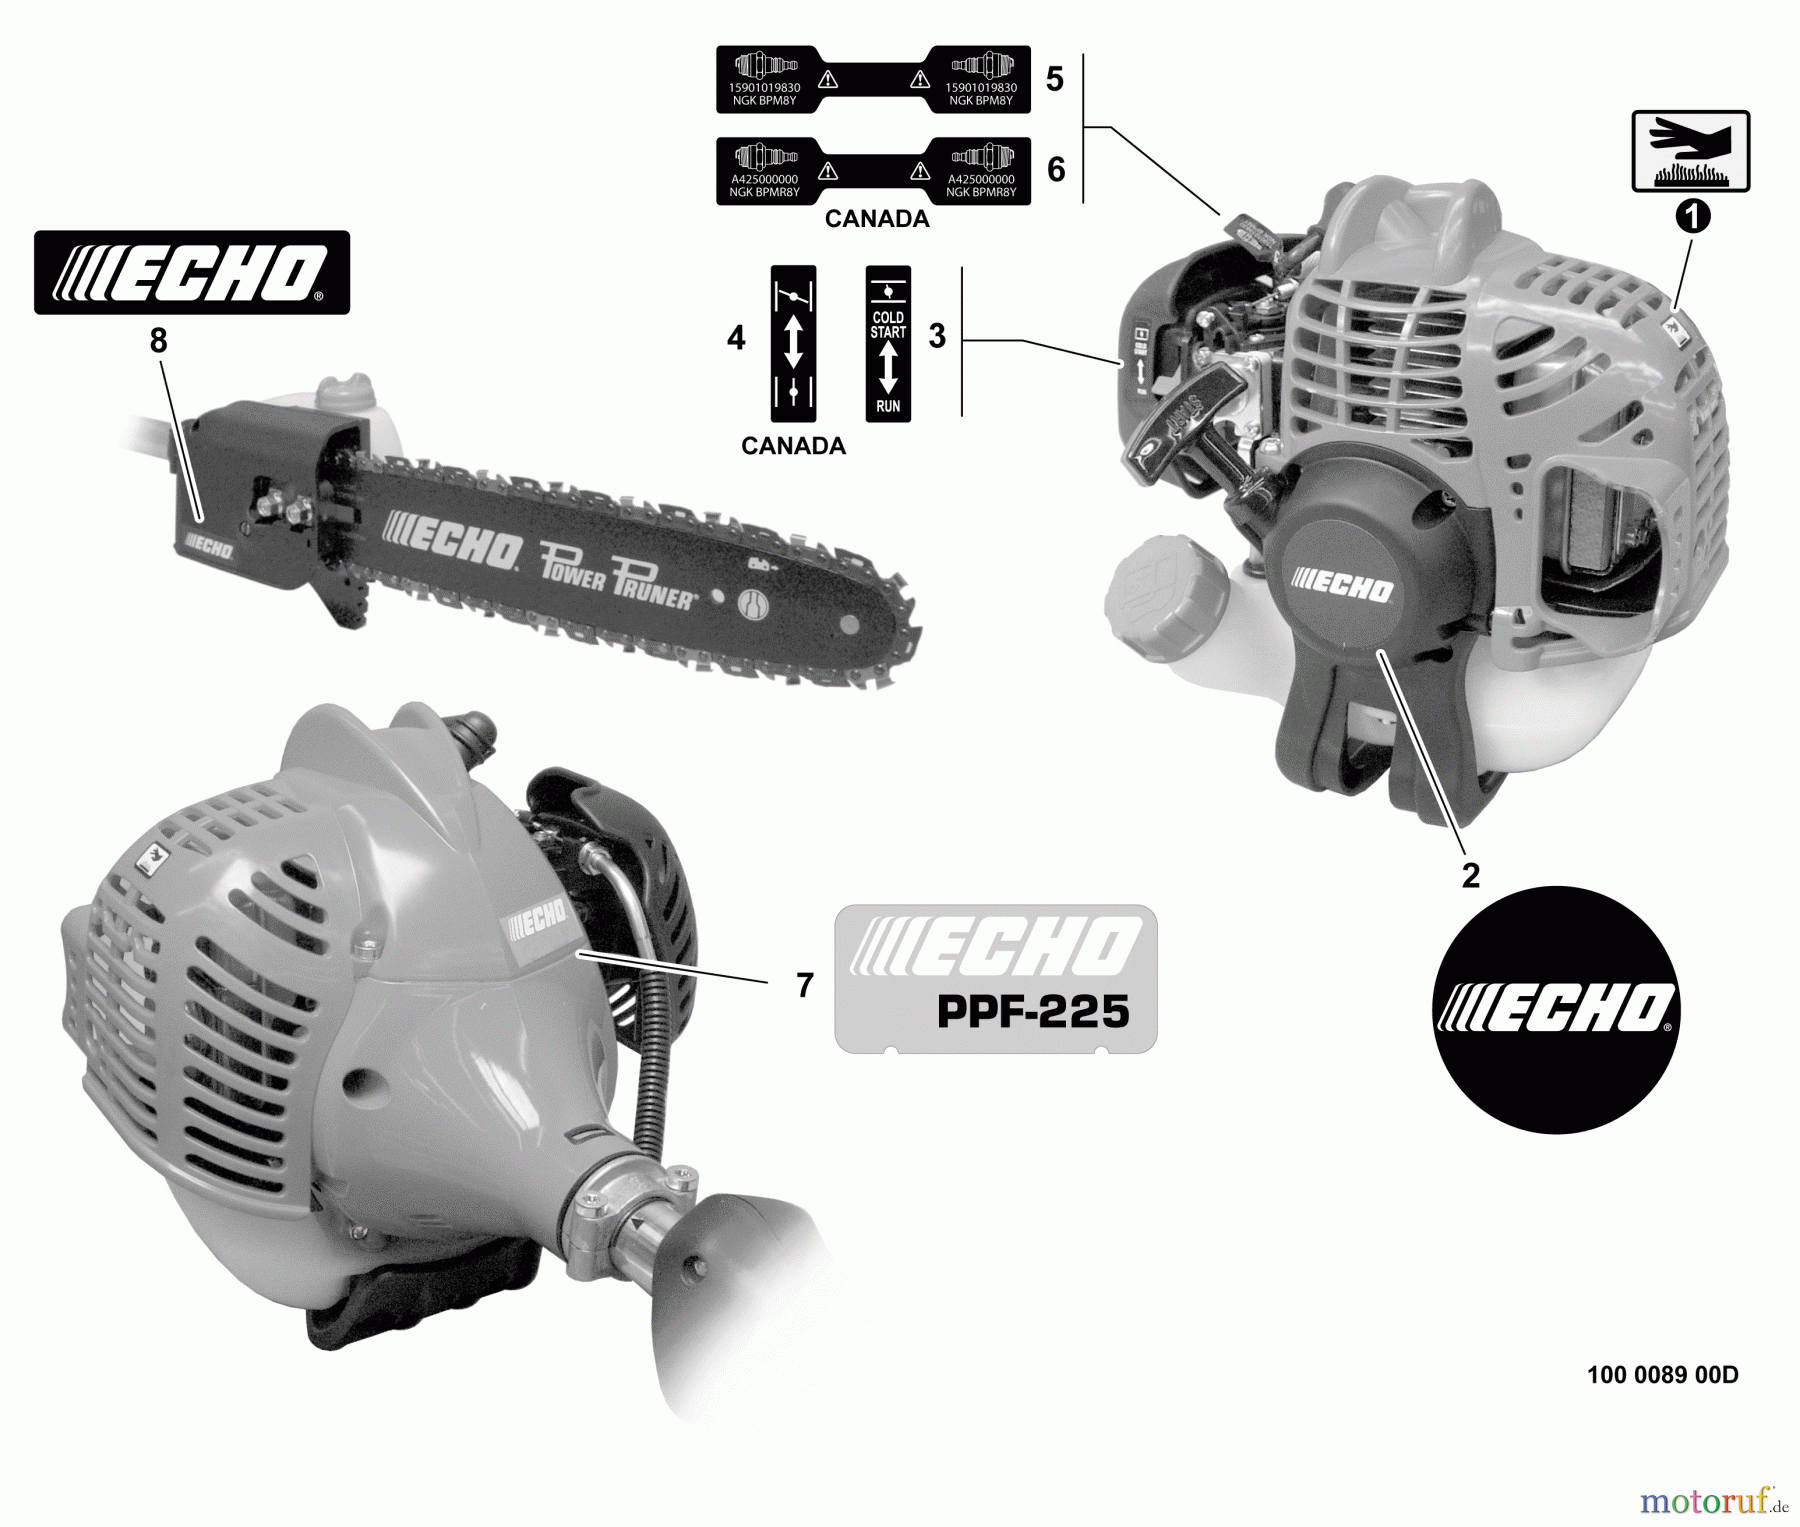  Echo Hochentaster PPF-225 - Echo Pole Saw / Pruner, S/N: S63413001001 - S63413999999 Labels